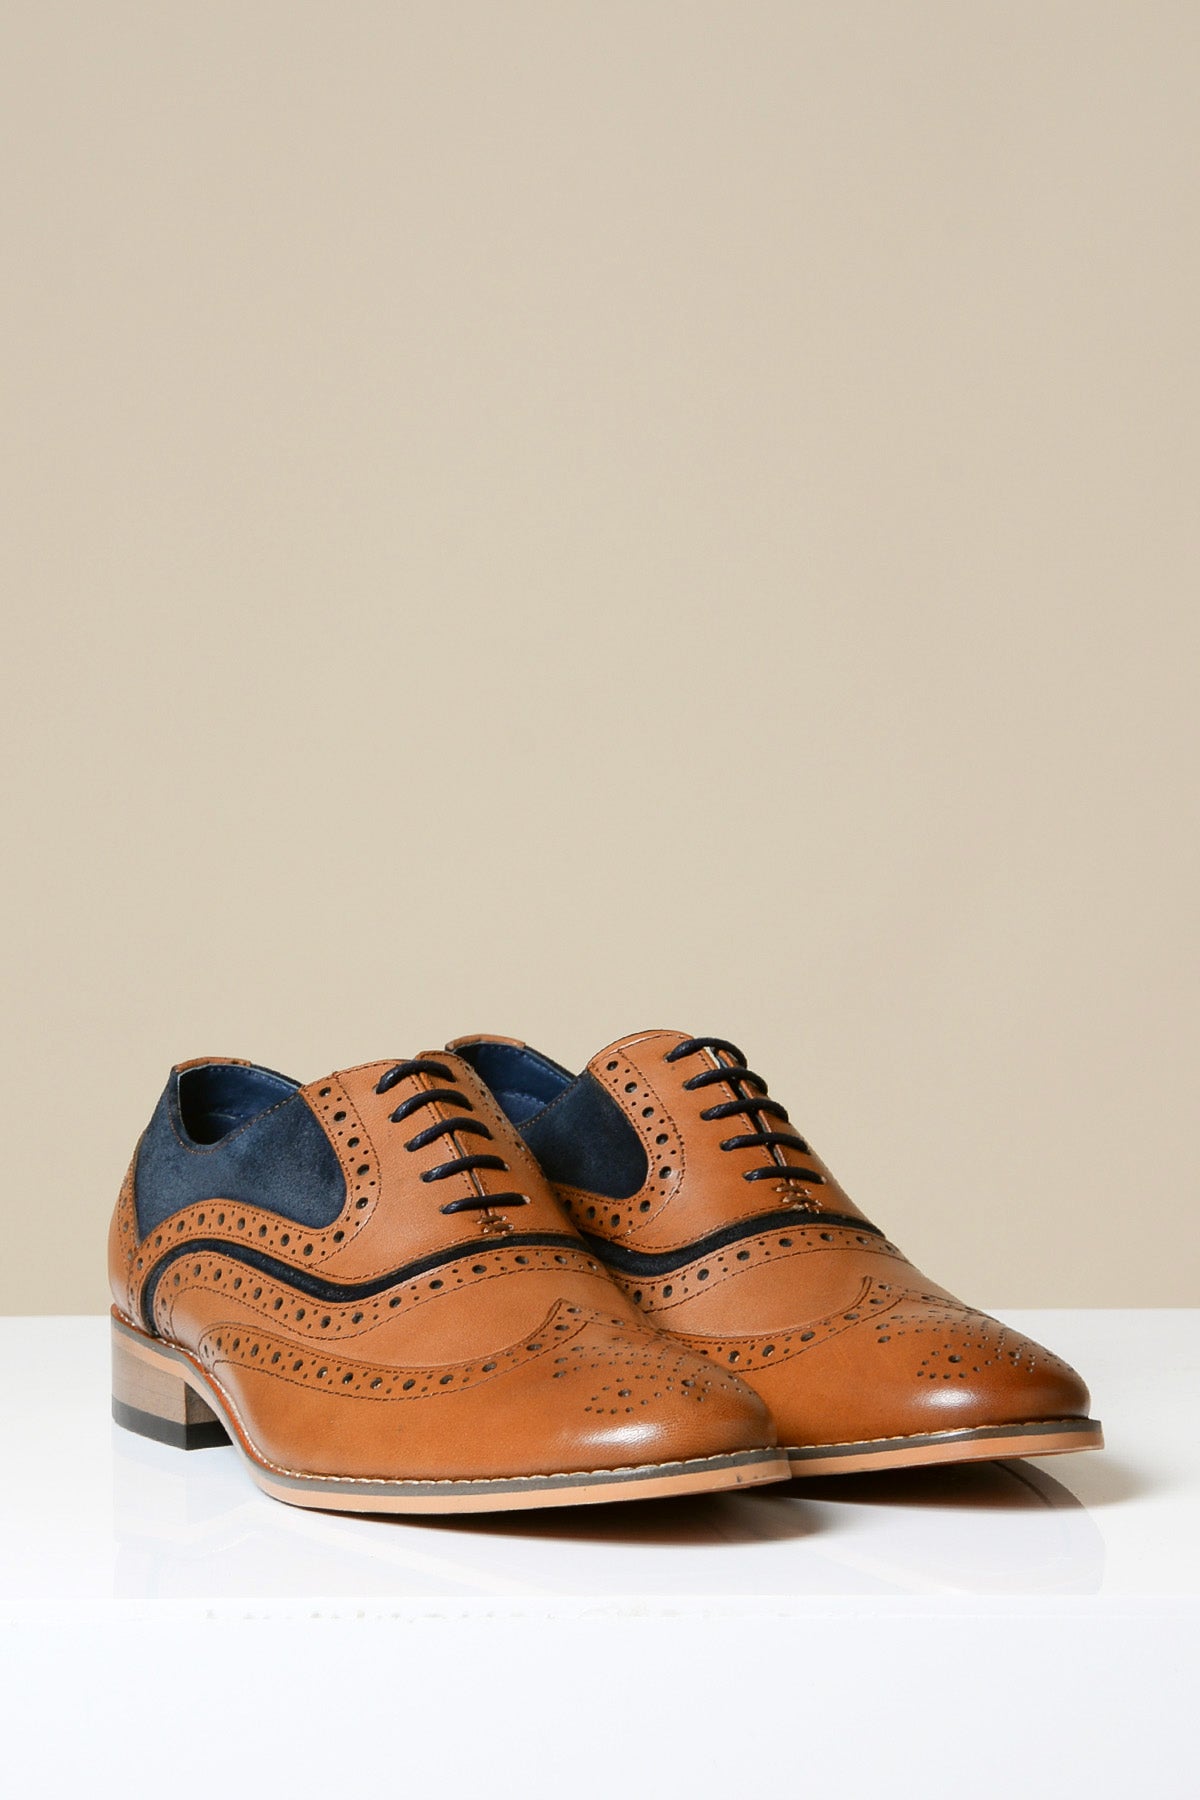 MURRAY - Contrast Tan Leather Suede Brogue Shoe